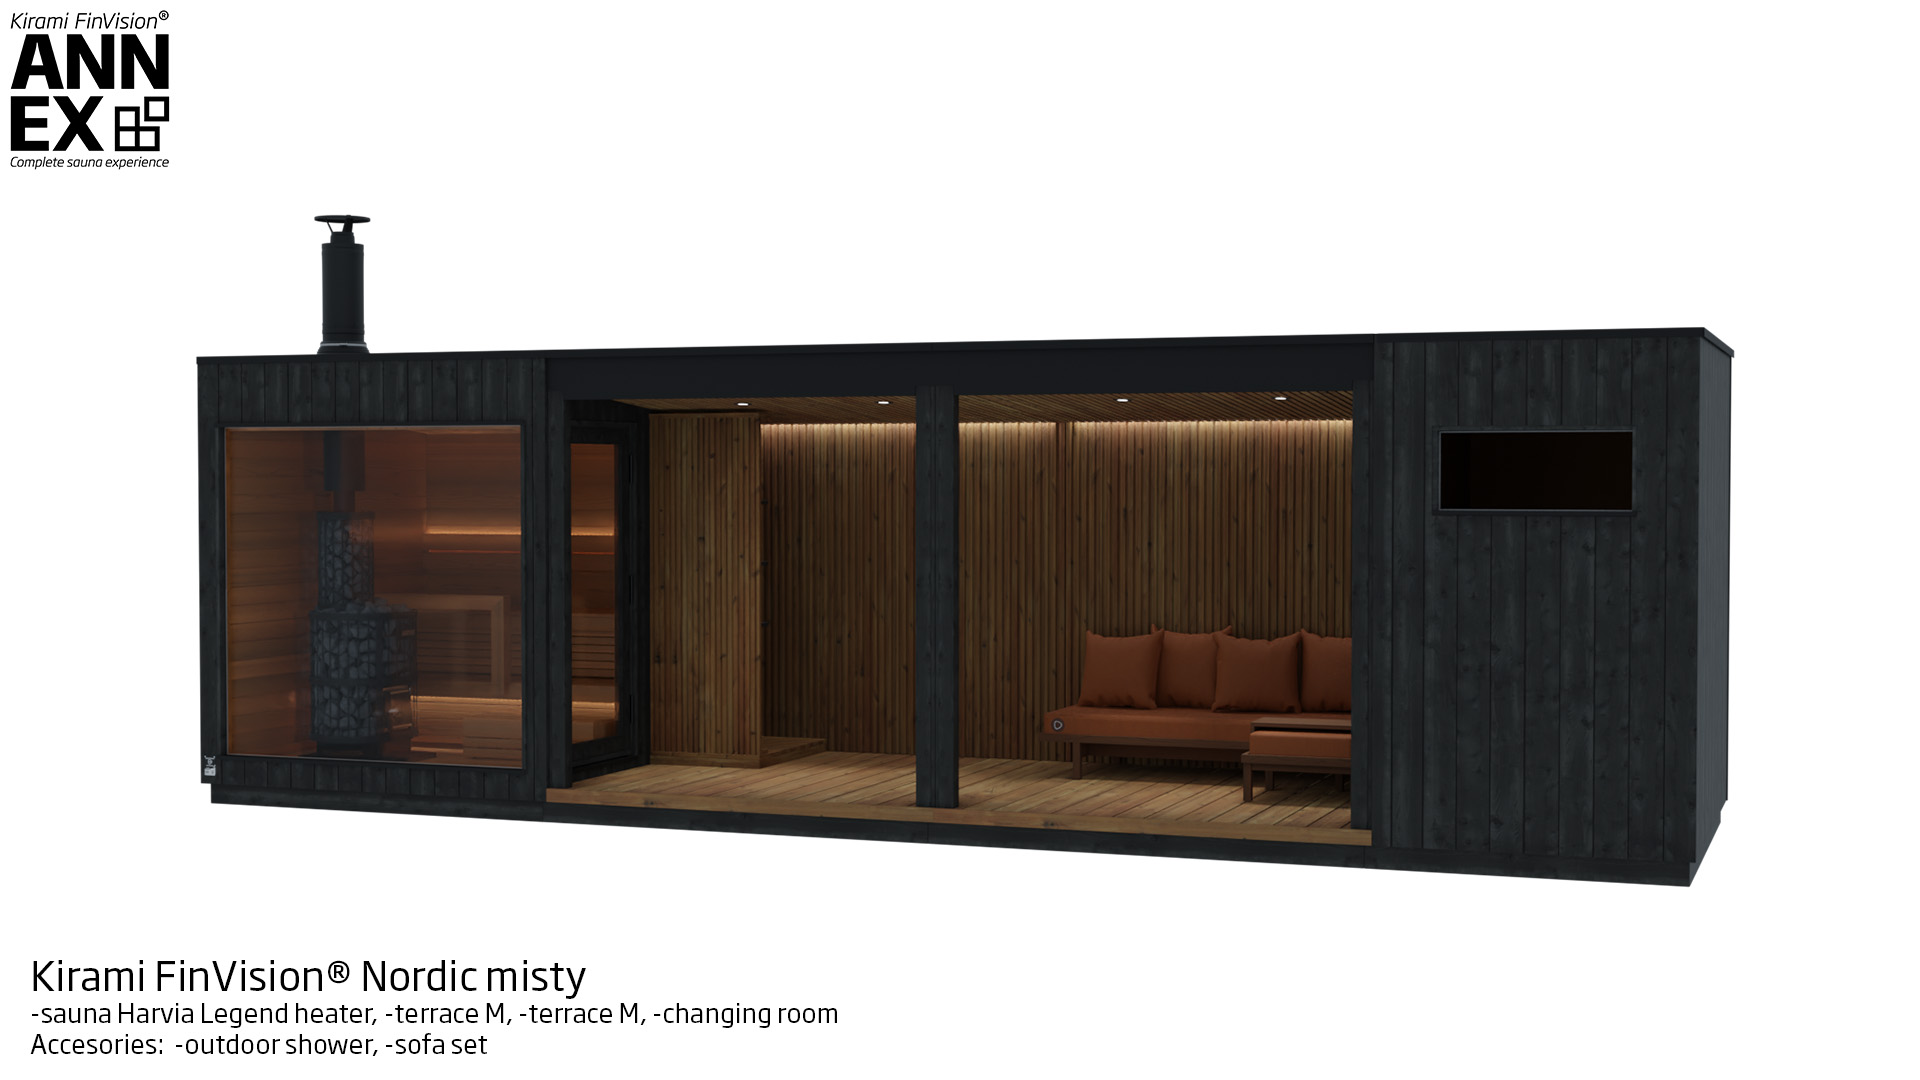 Kirami FinVision® -sauna (with Harvia Legend heater), -terrace M, -terrace M, -changing room Nordic misty | Kirami FinVision® Annex